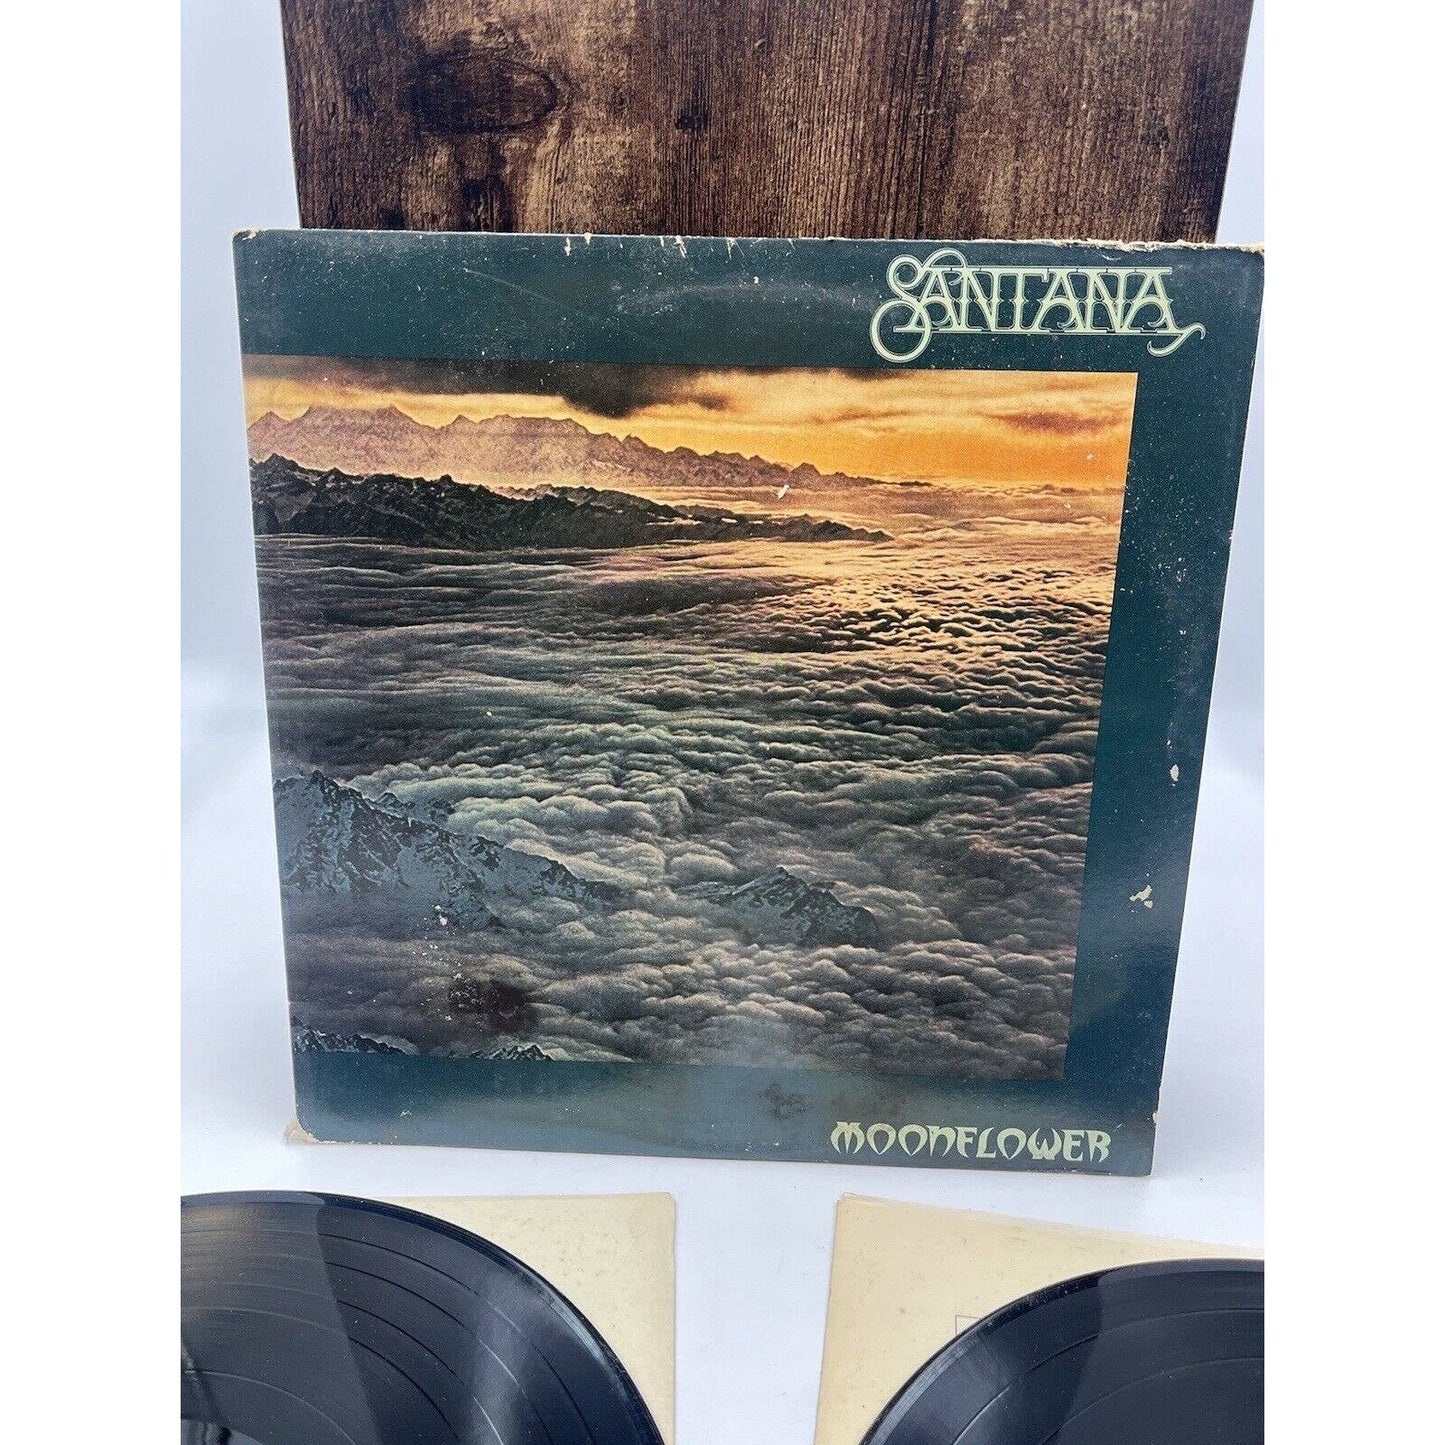 SANTANA MOONFLOWER VINYL 2LPS COLUMBIA 1977 VG